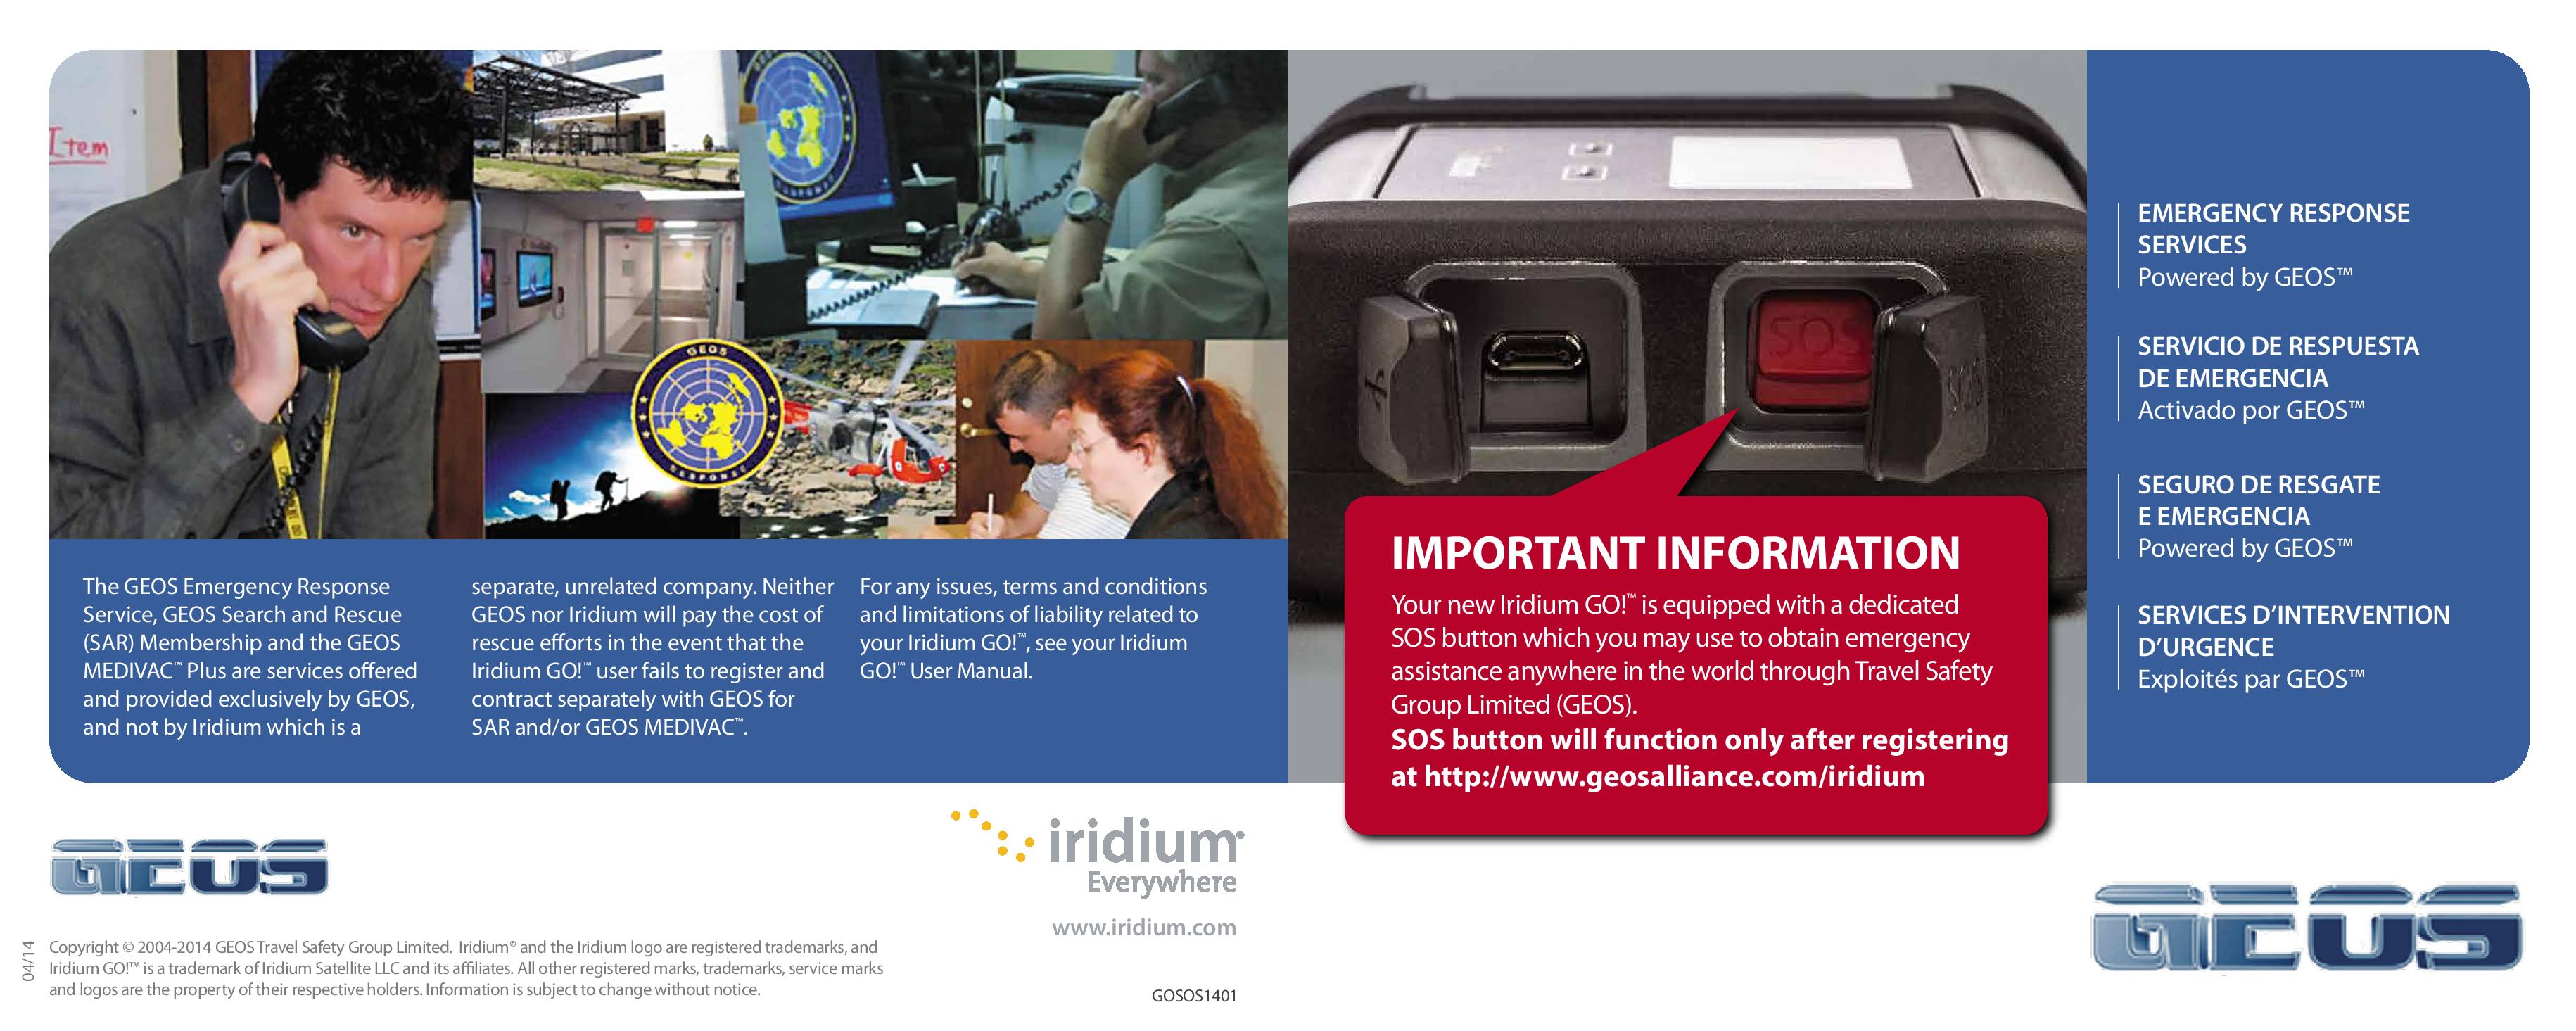 BR_Iridium_GO__GEOS_Brochure_APR14-page-001.jpg